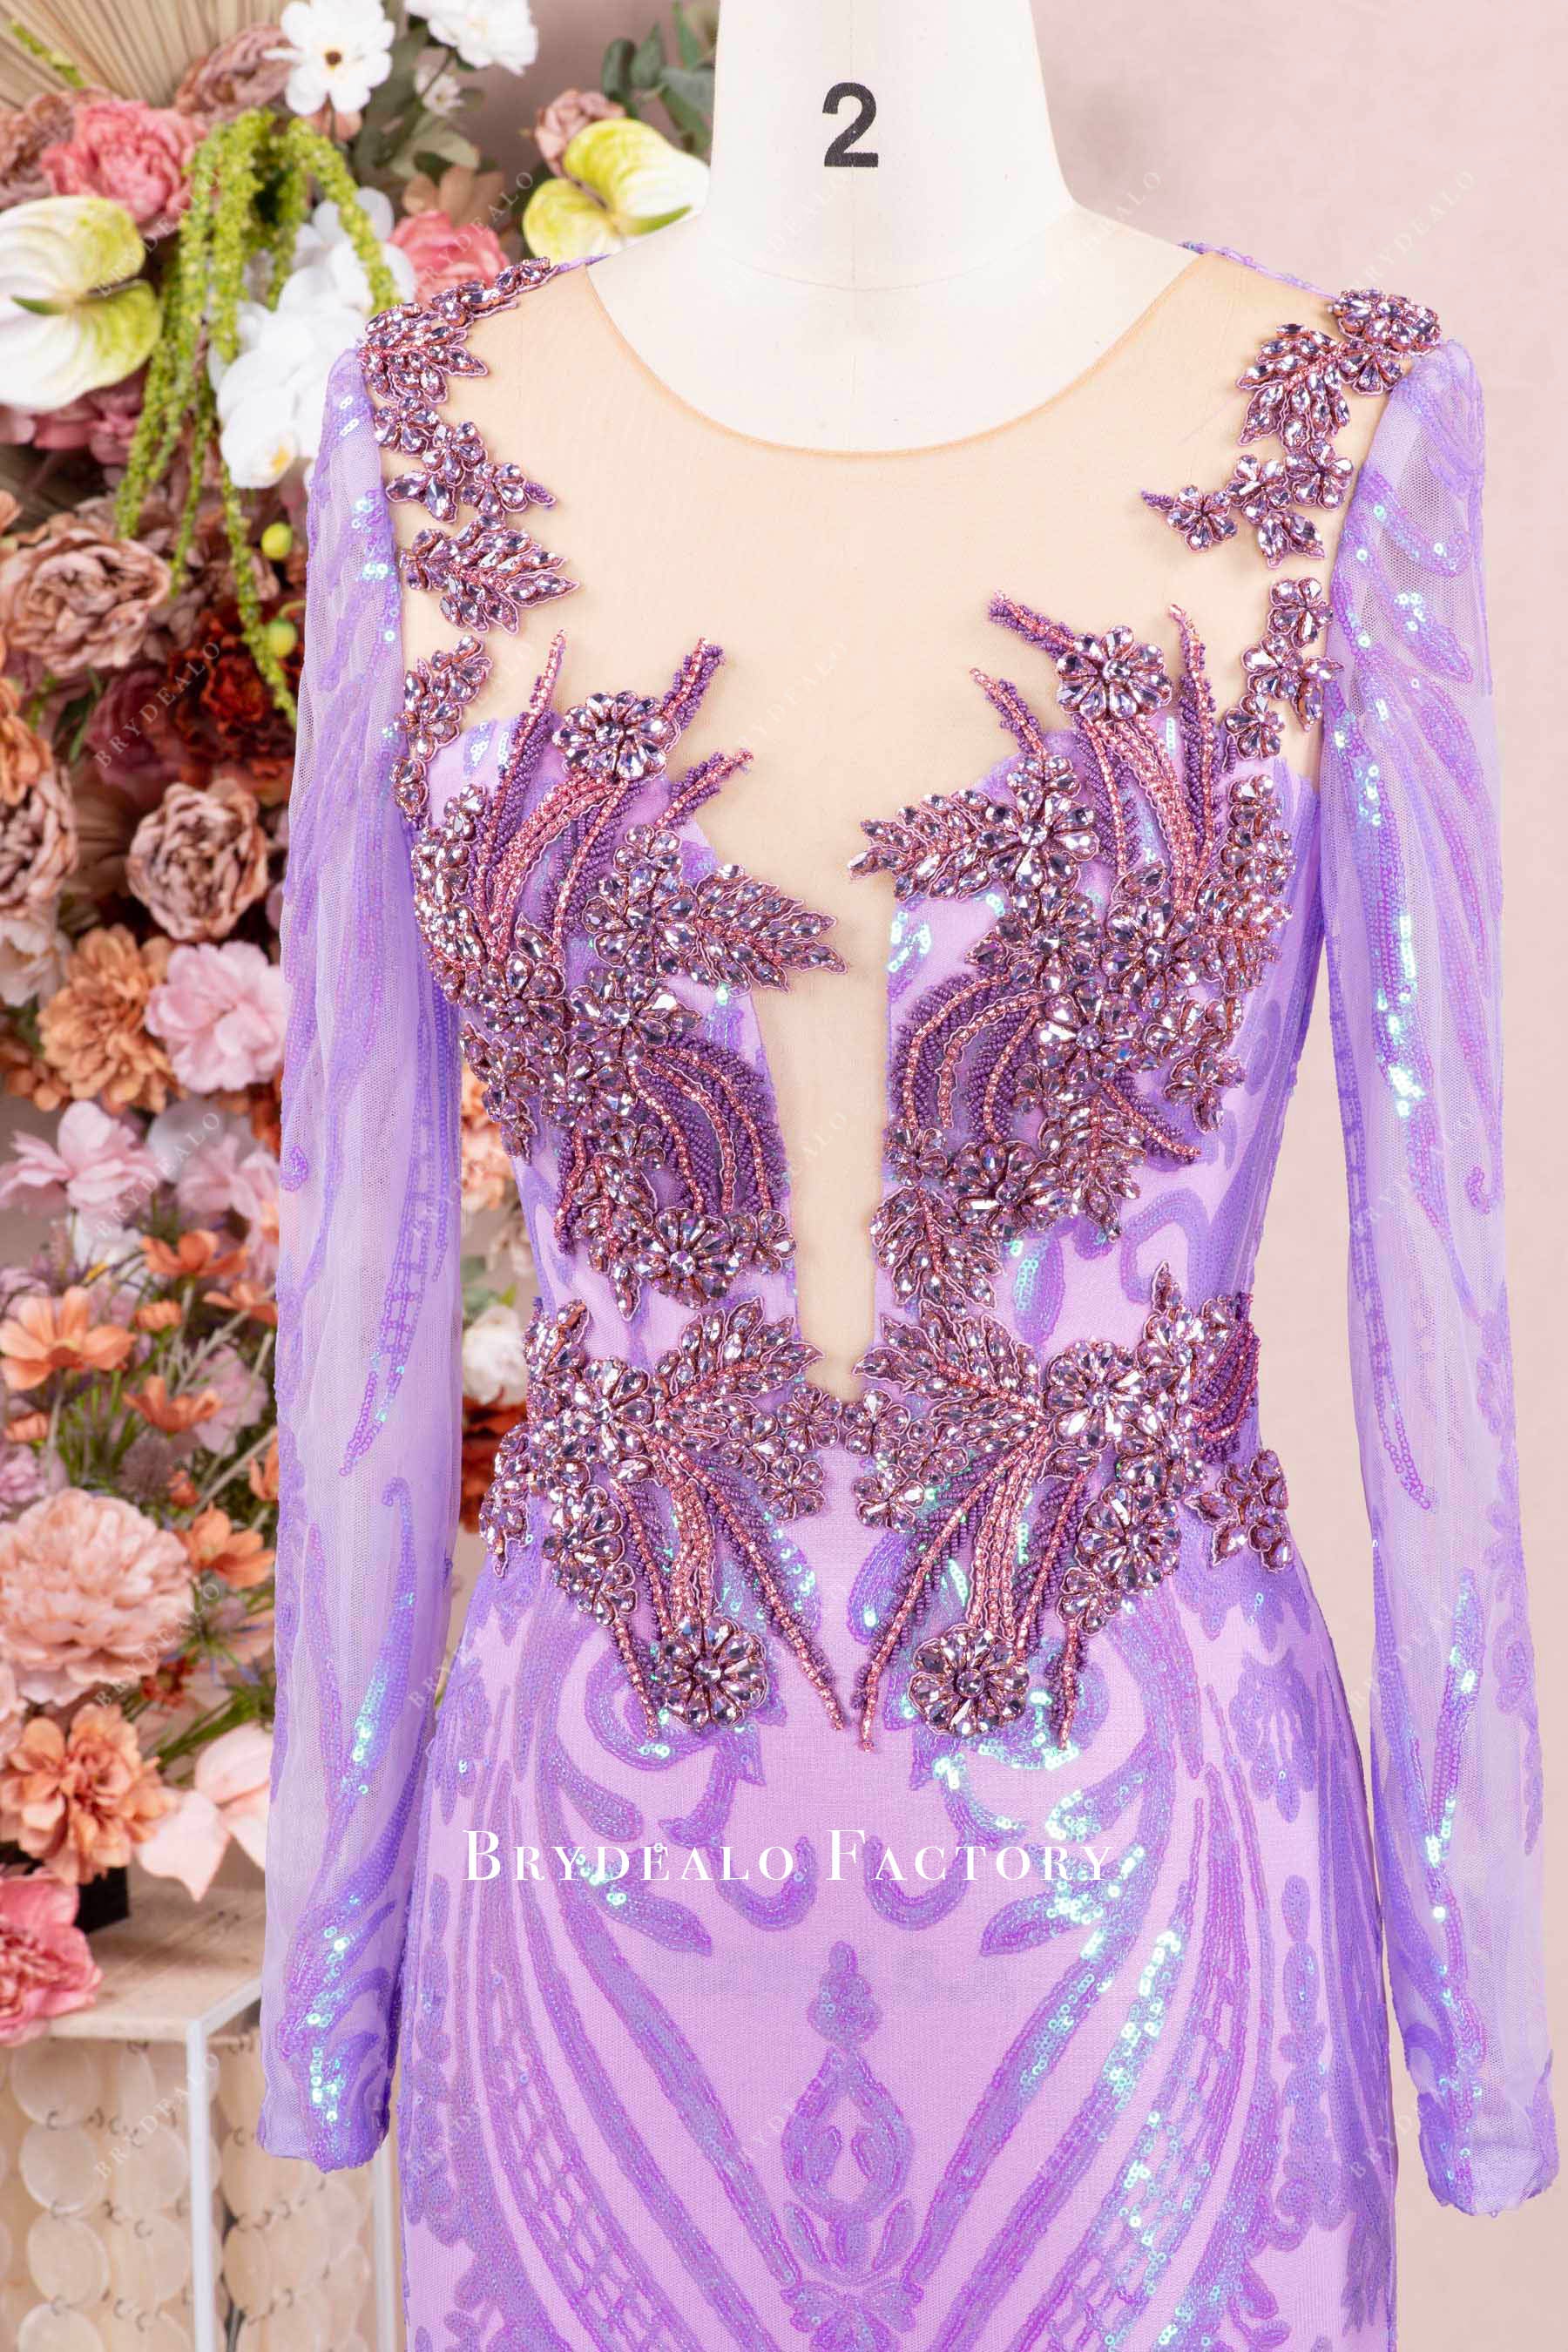 sparkly hand-sewn rhinestone prom dress